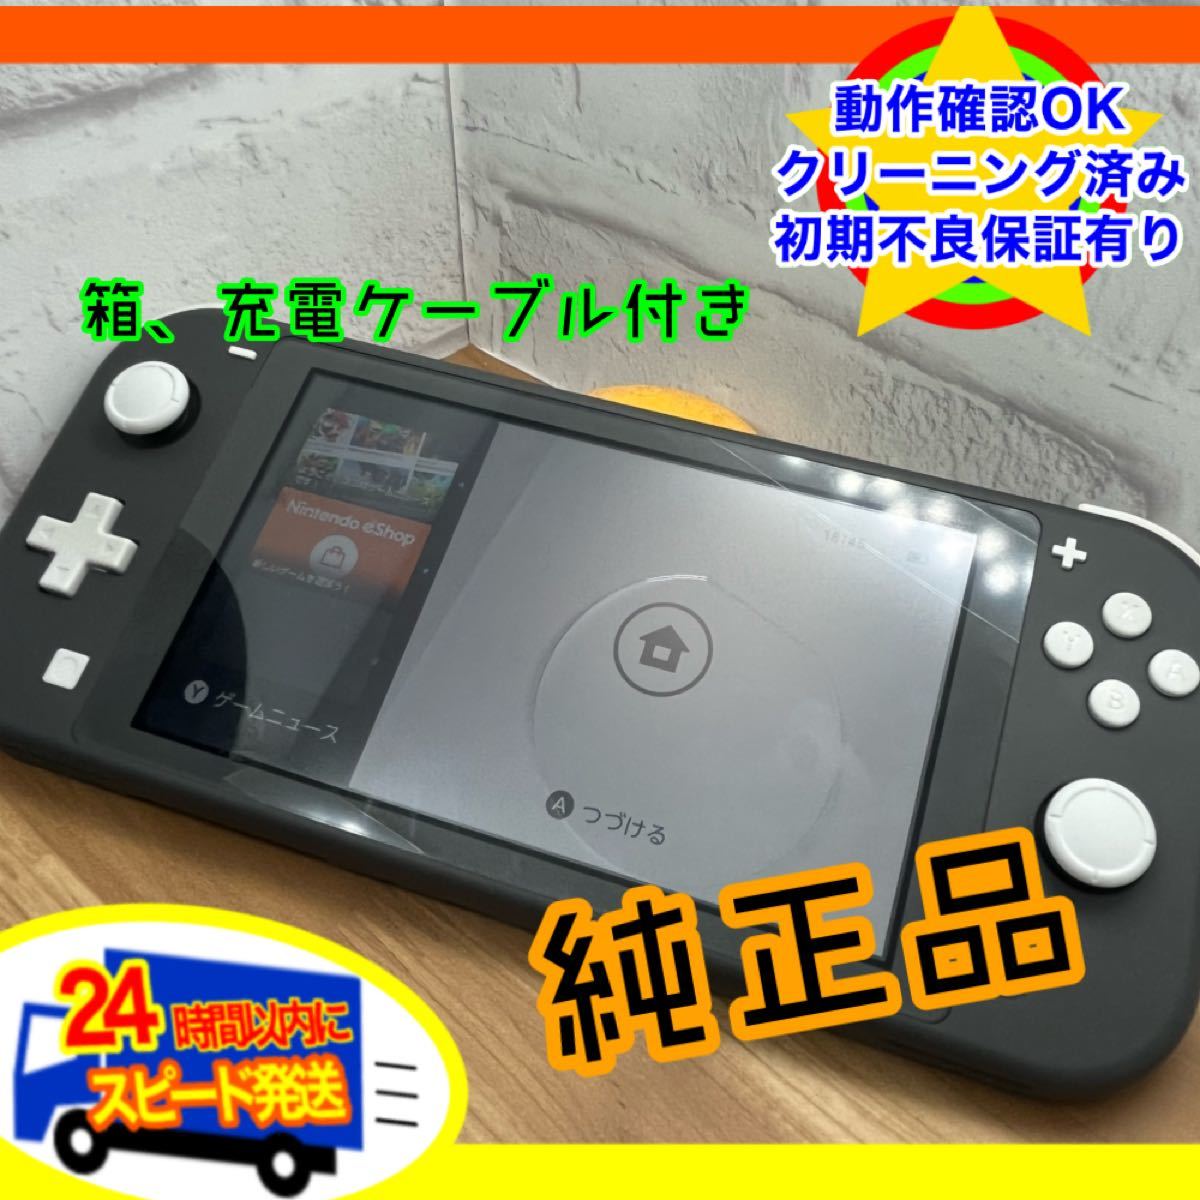 Nintendo Switchライト 本体のみ | myglobaltax.com